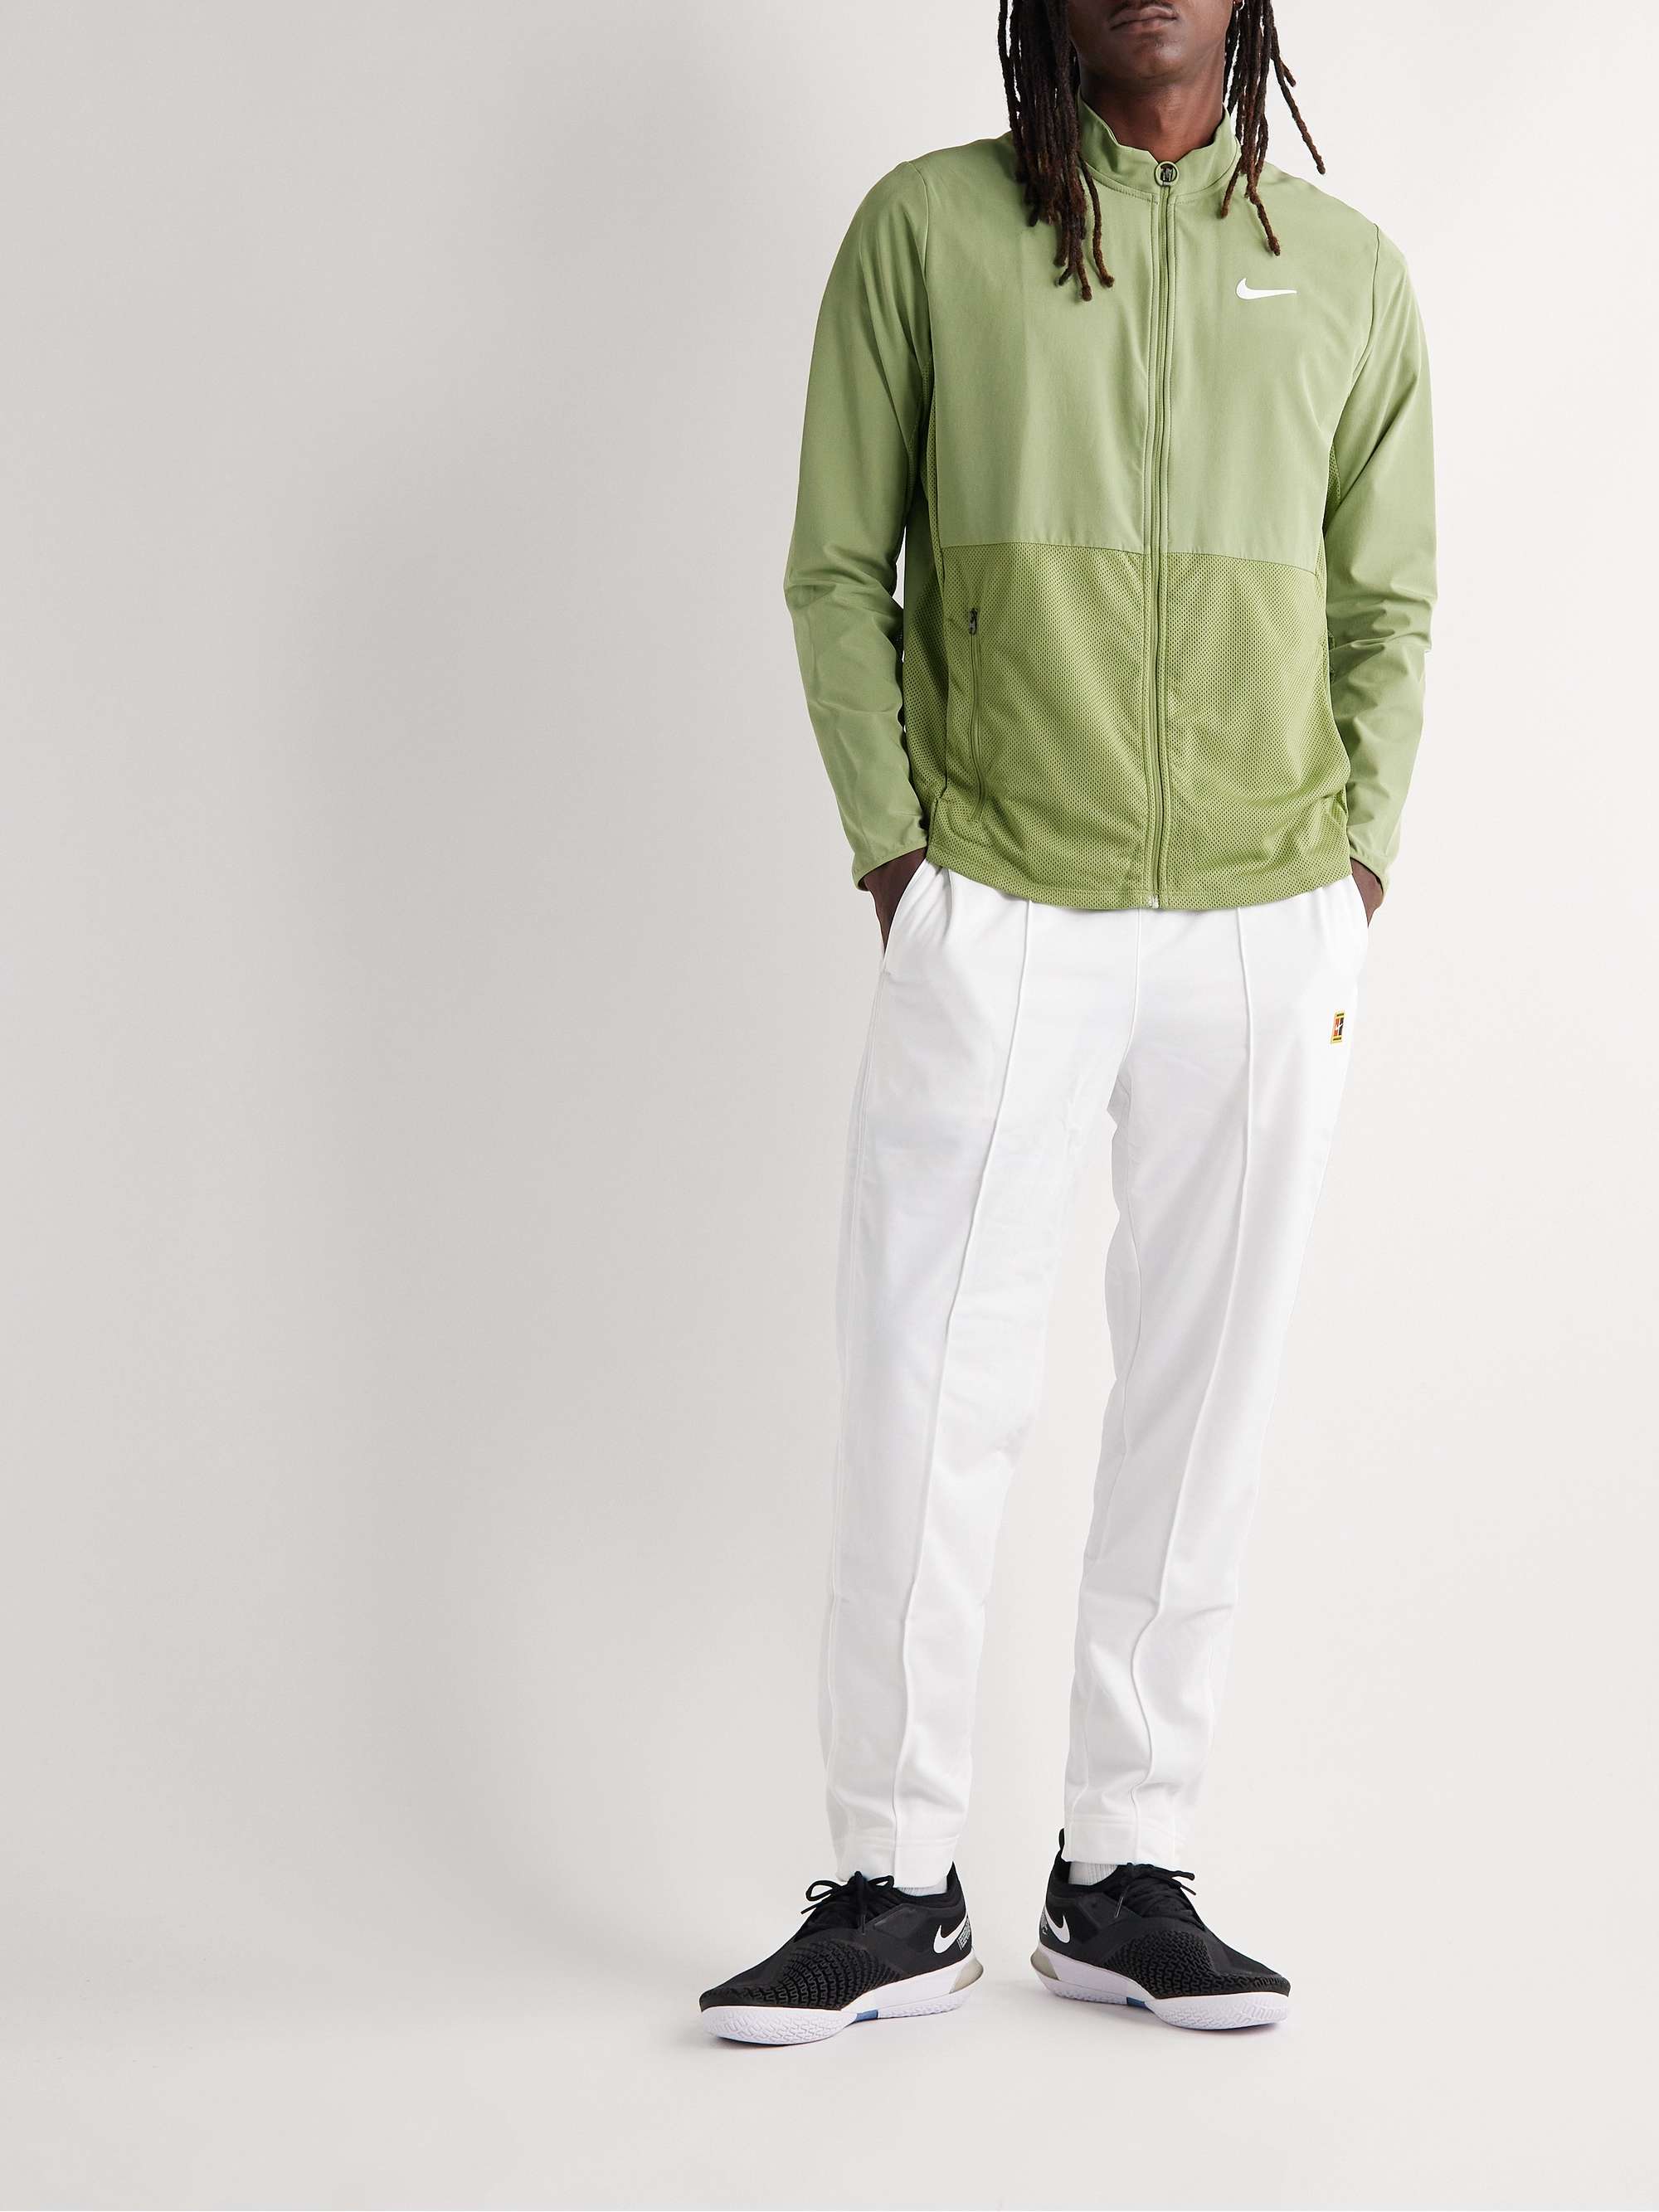 Green NikeCourt Advantage Mesh and Shell Tennis Jacket | NIKE TENNIS | MR  PORTER